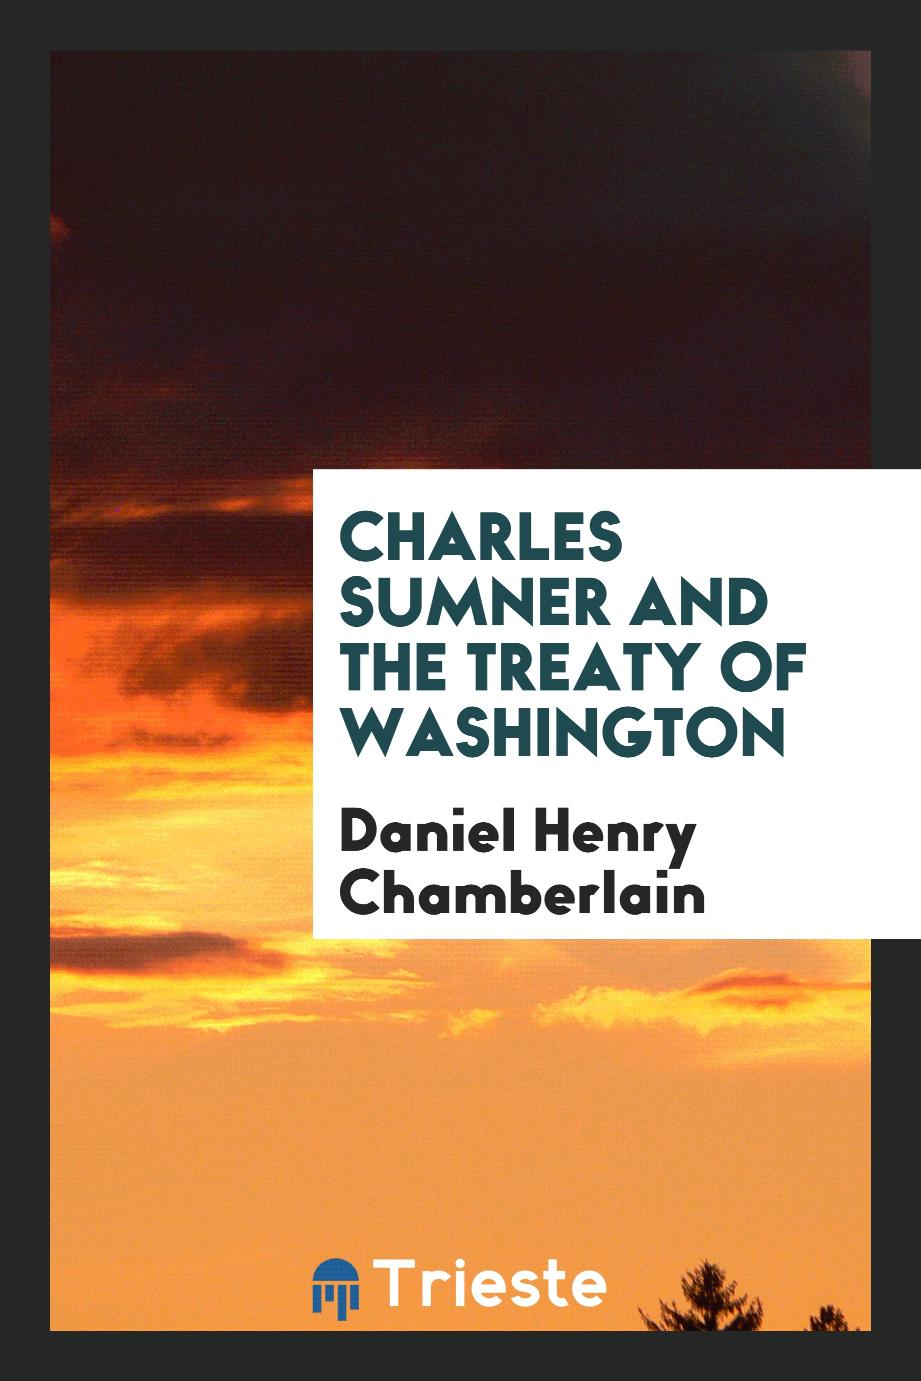 Charles Sumner and the treaty of Washington